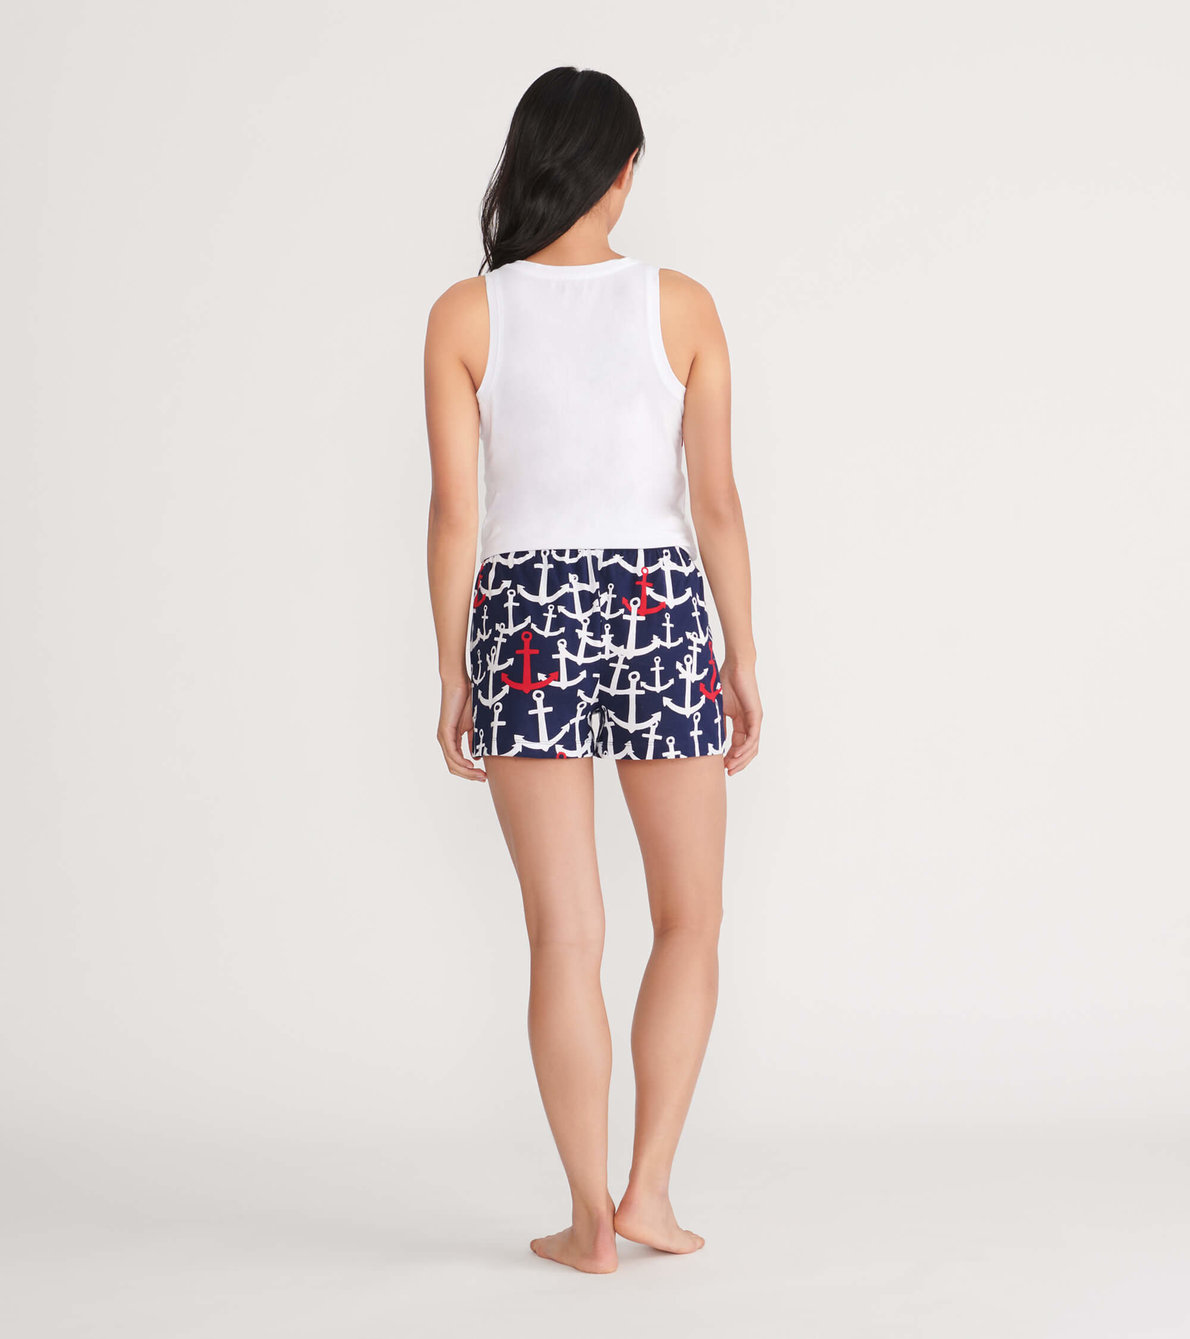 View larger image of Anchors Women's Tank and Shorts Pajama Separates